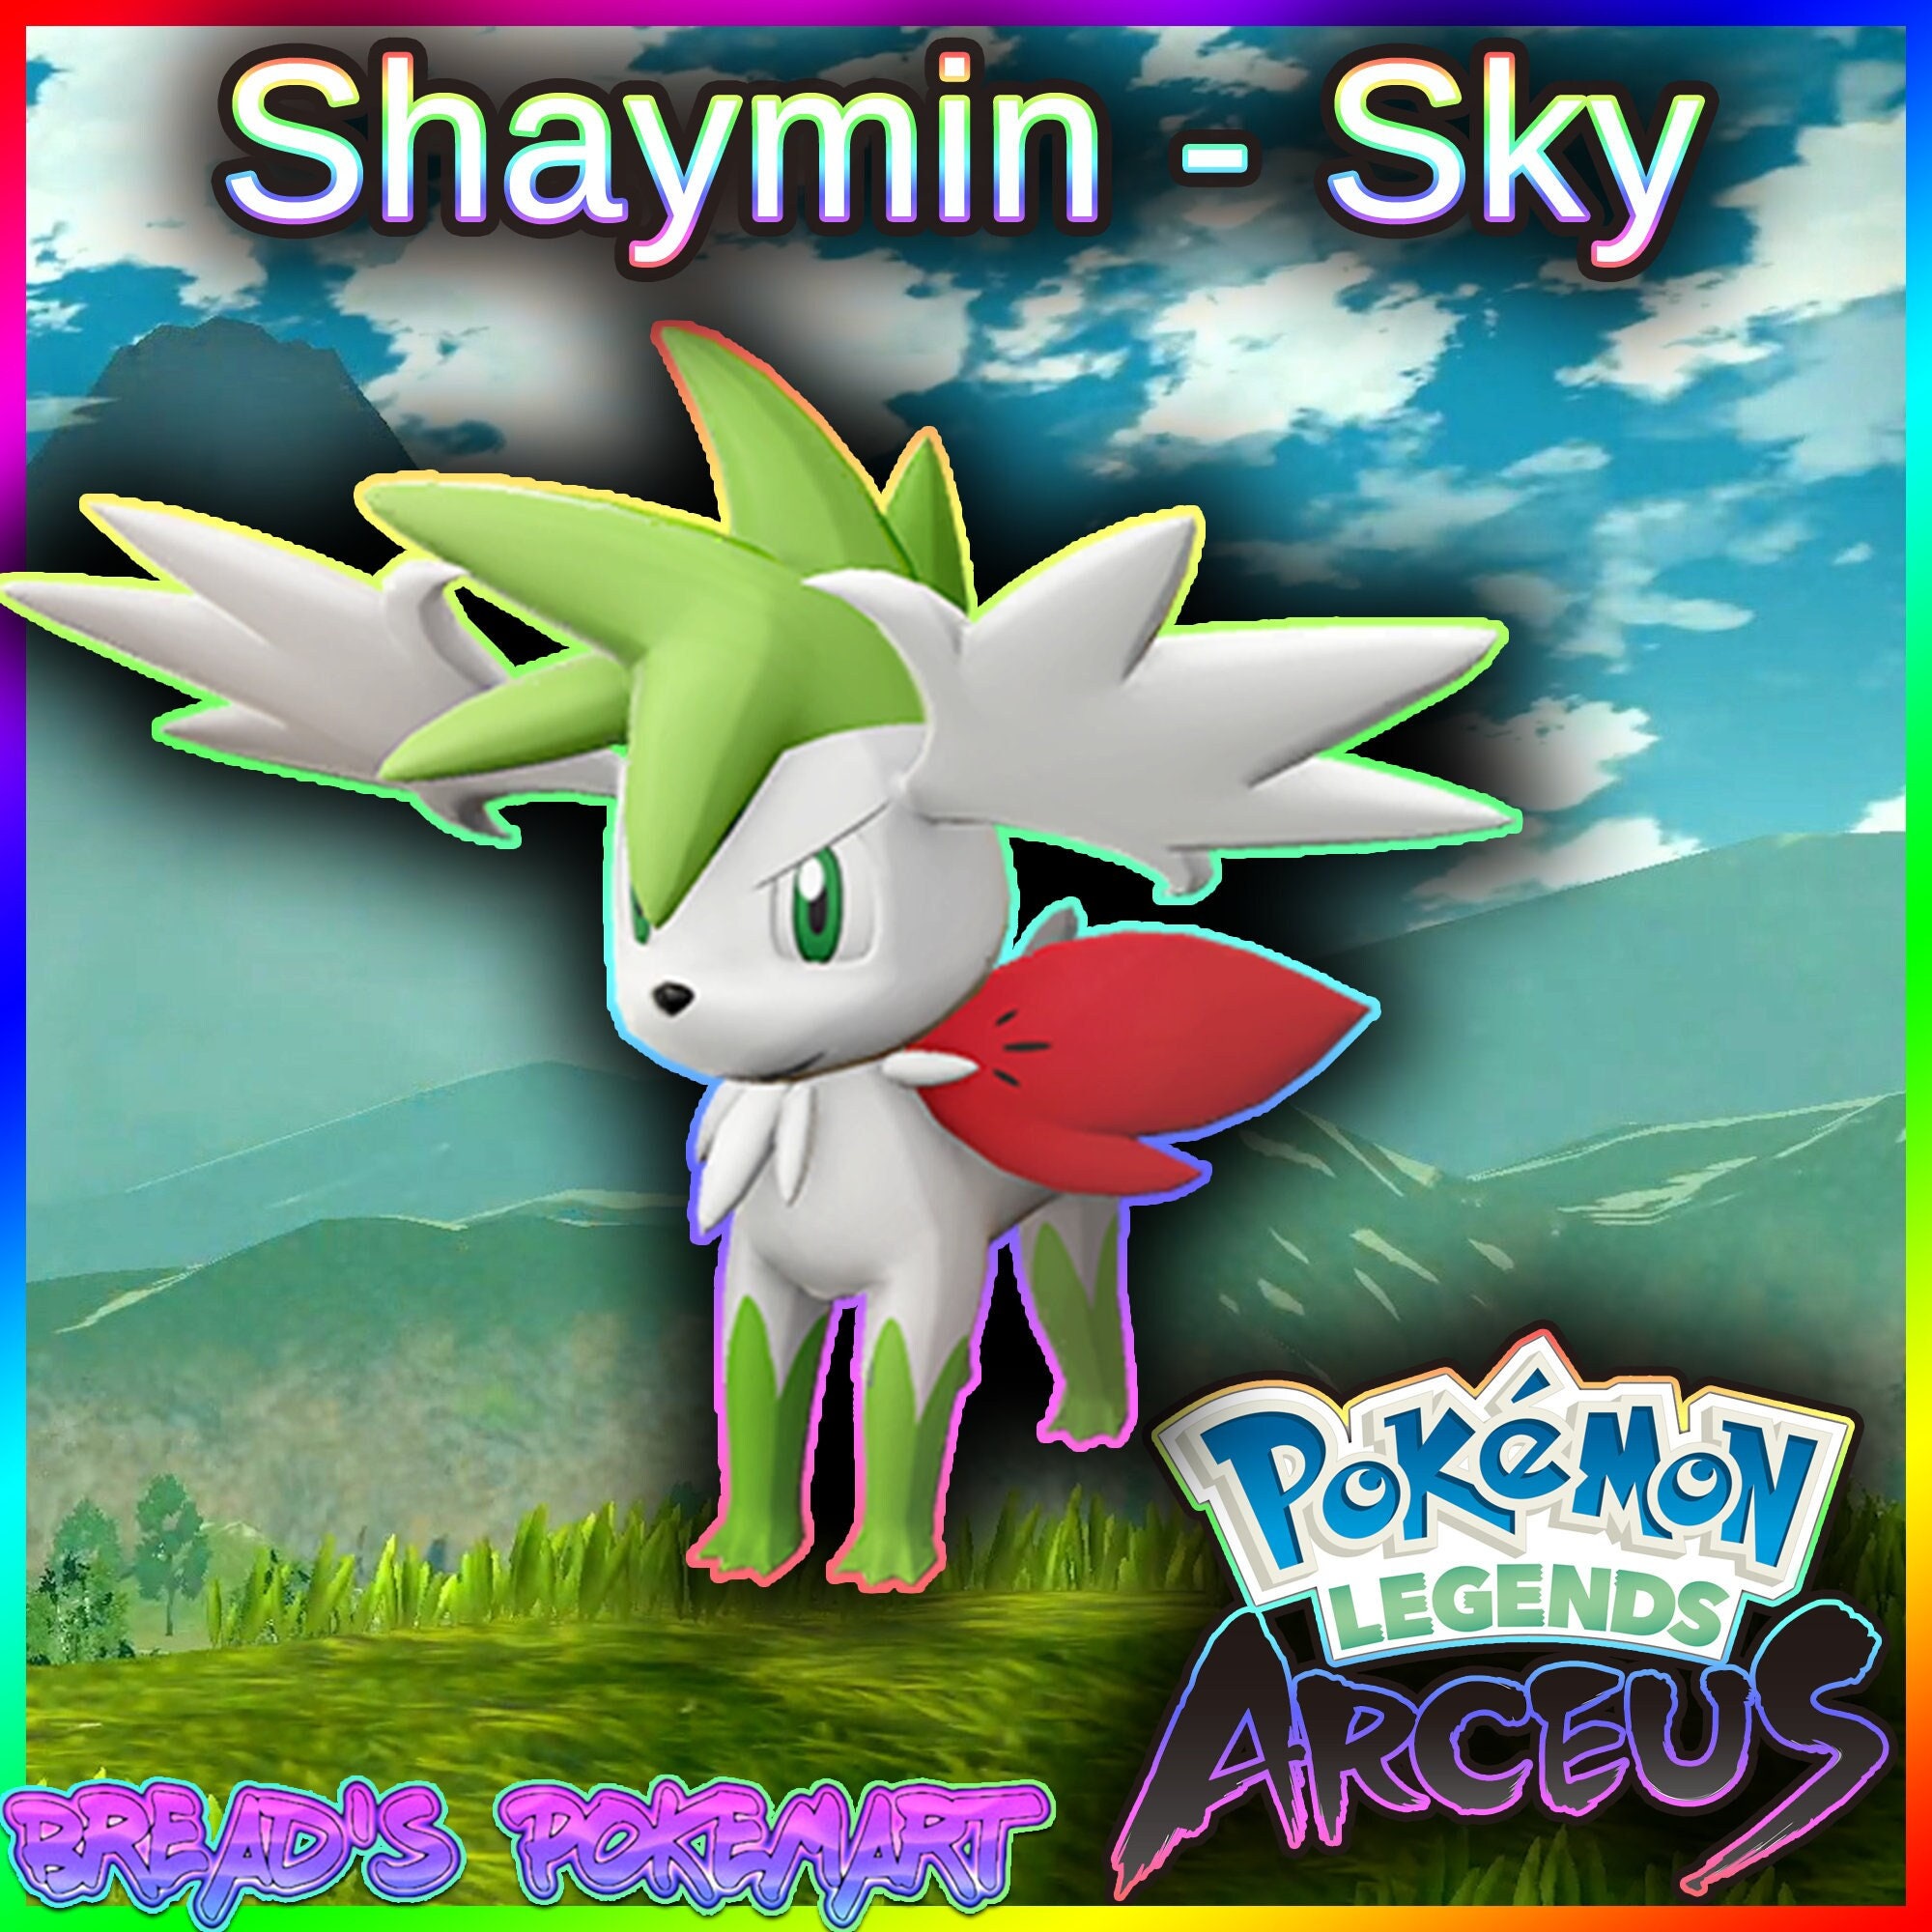 Shaymin now available via free gift in Pokemon Brilliant Diamond